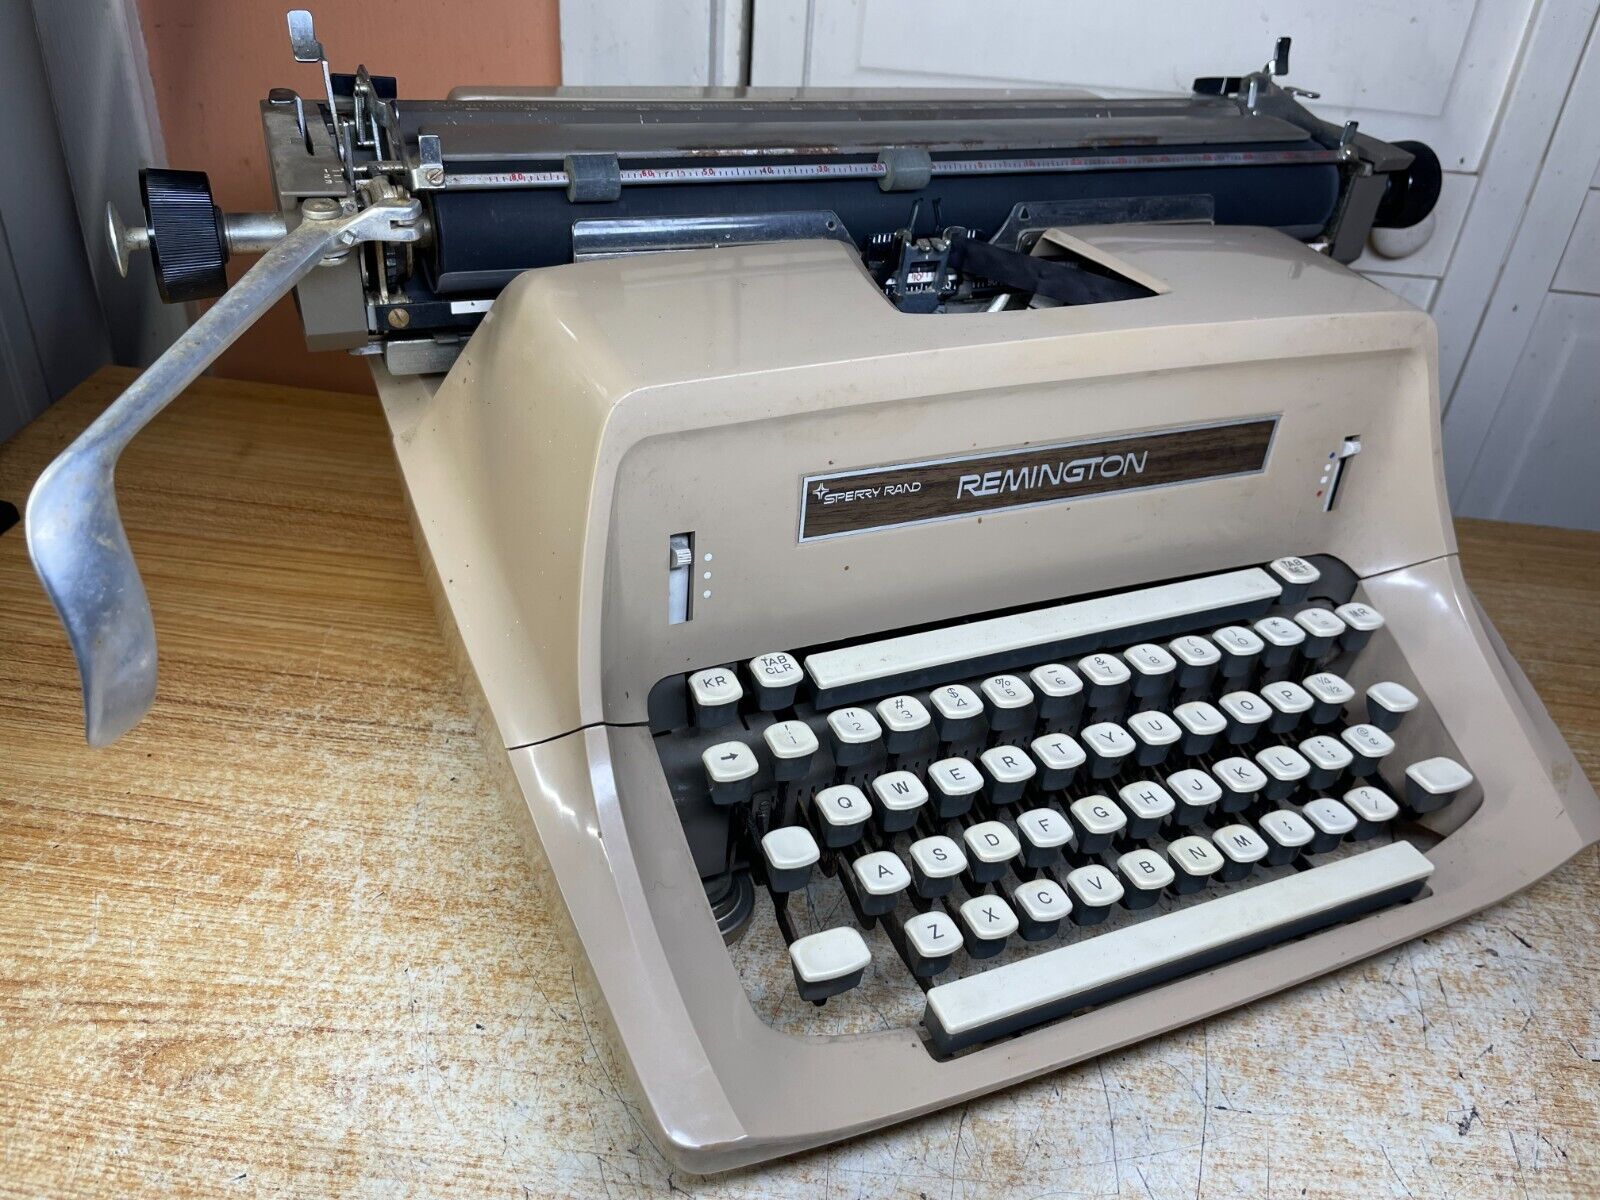 1970 Remington Model 24 Fully Functional Working Vintage Typewriter w New Ink